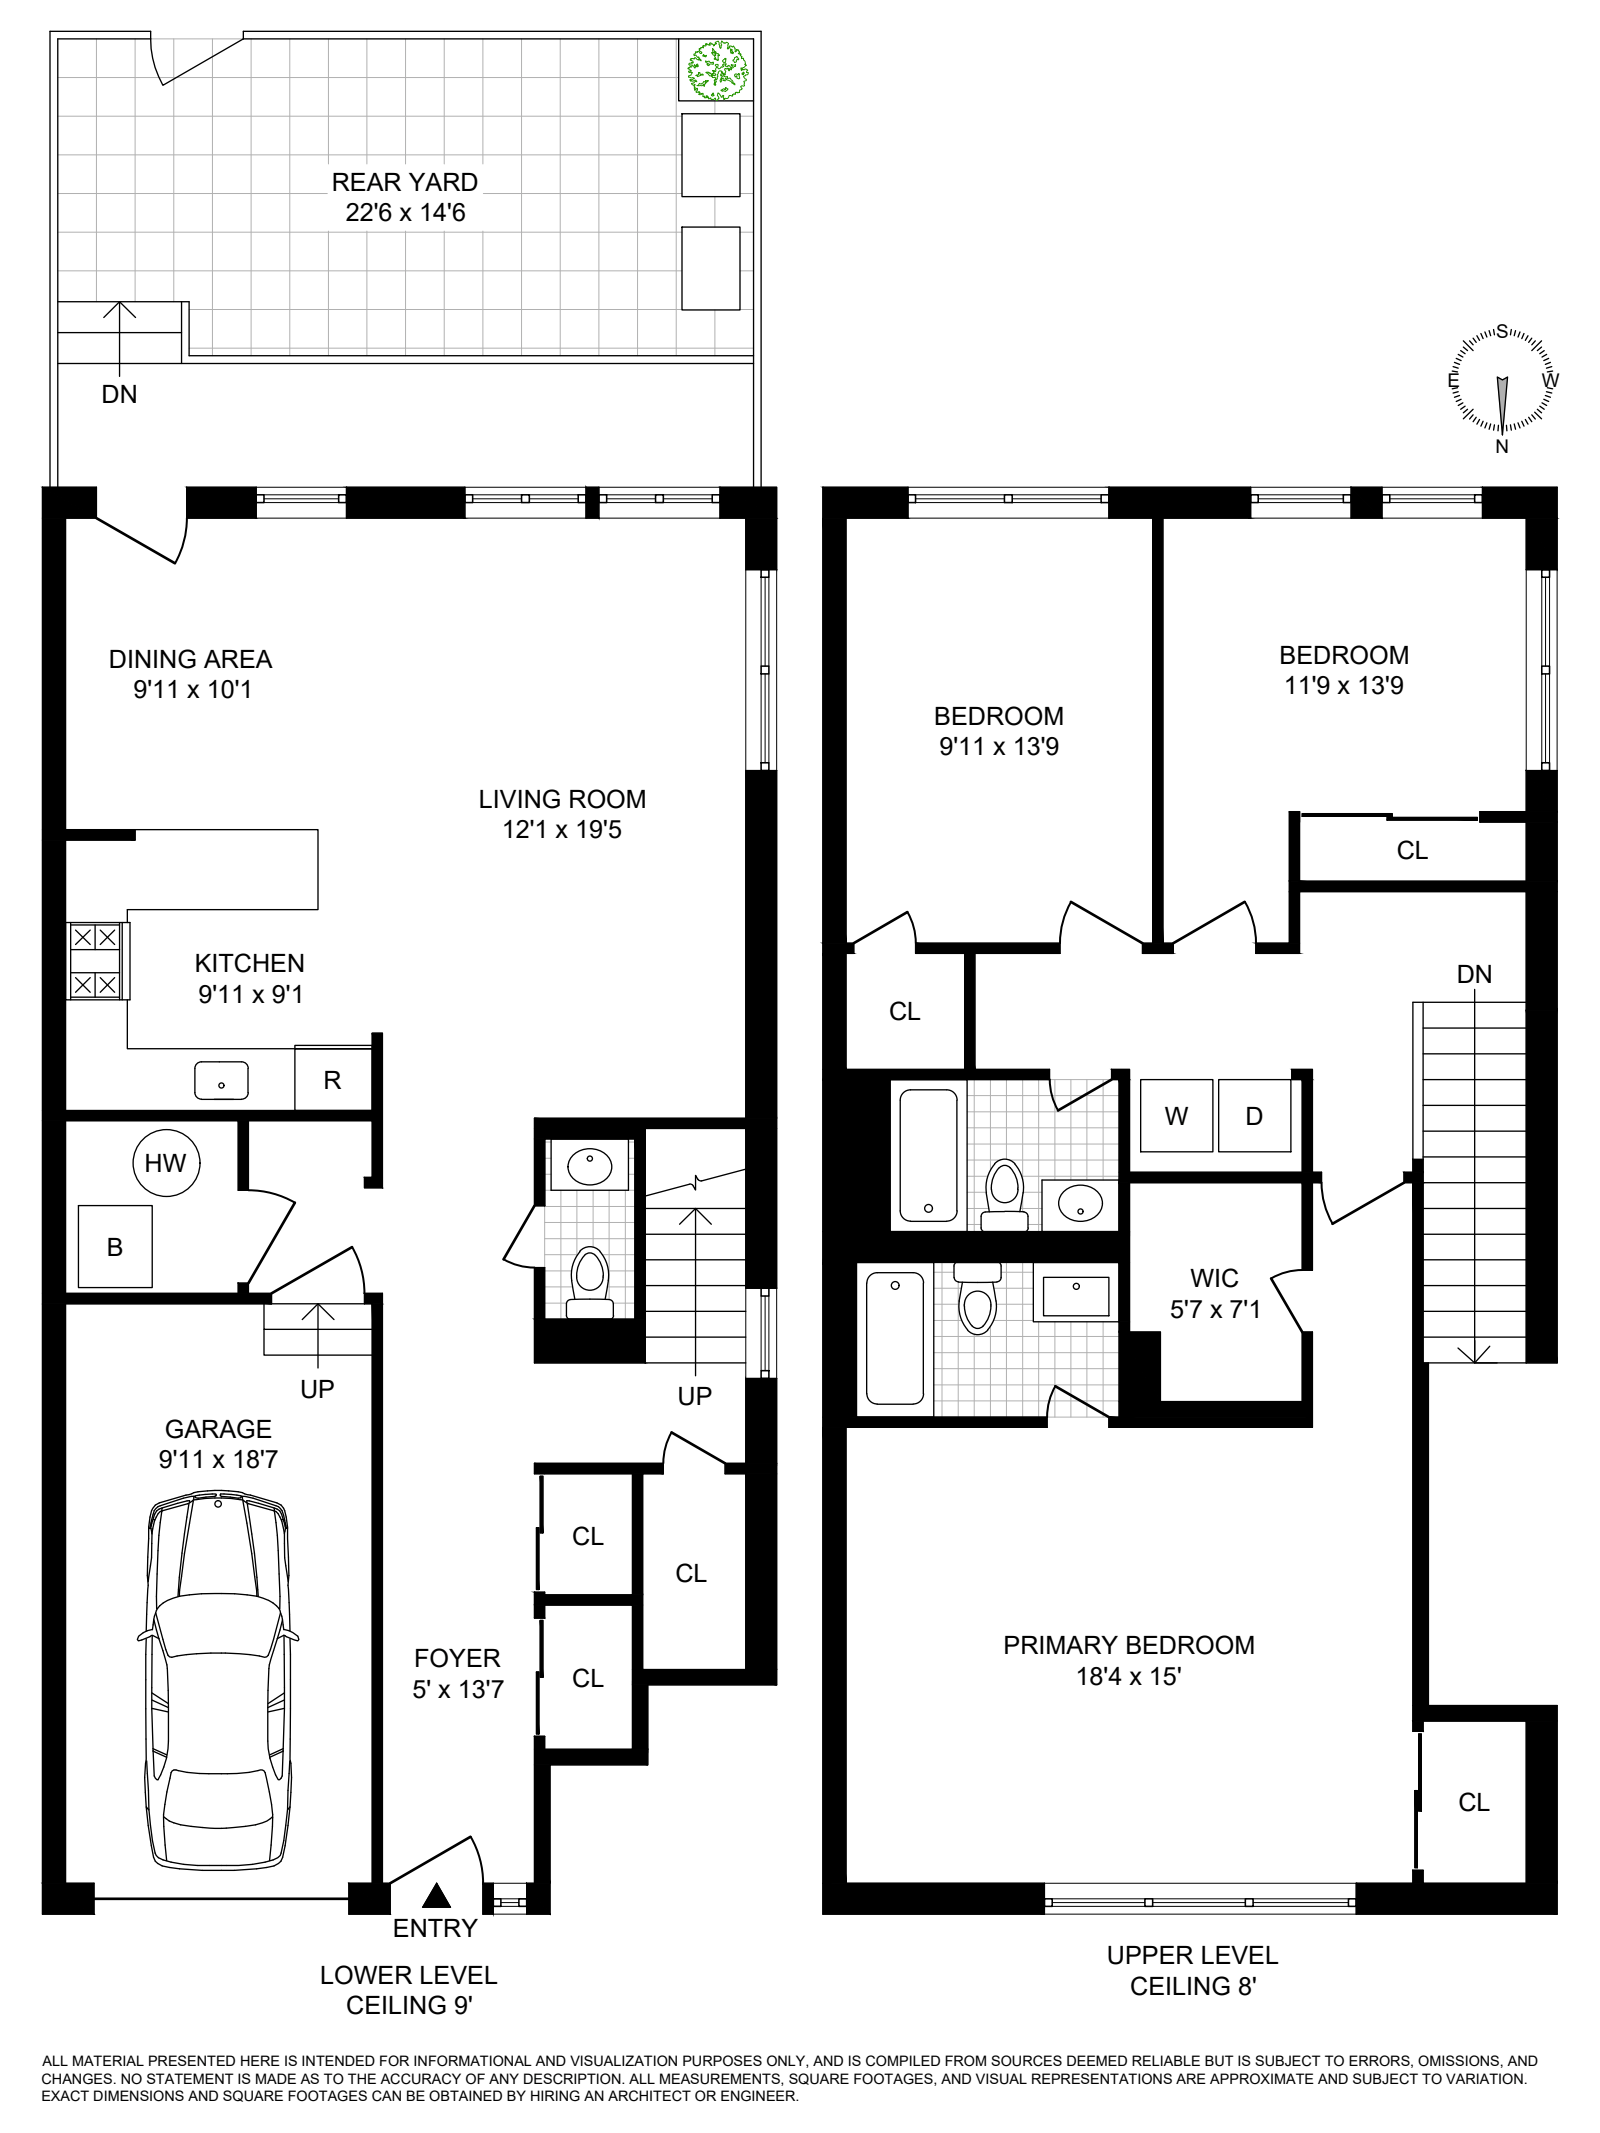 Floorplan for 7319 Lighthouse Drive